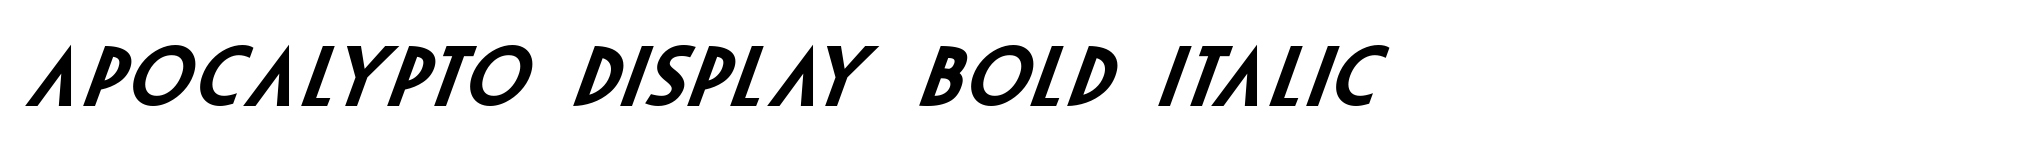 Apocalypto Display Bold Italic image